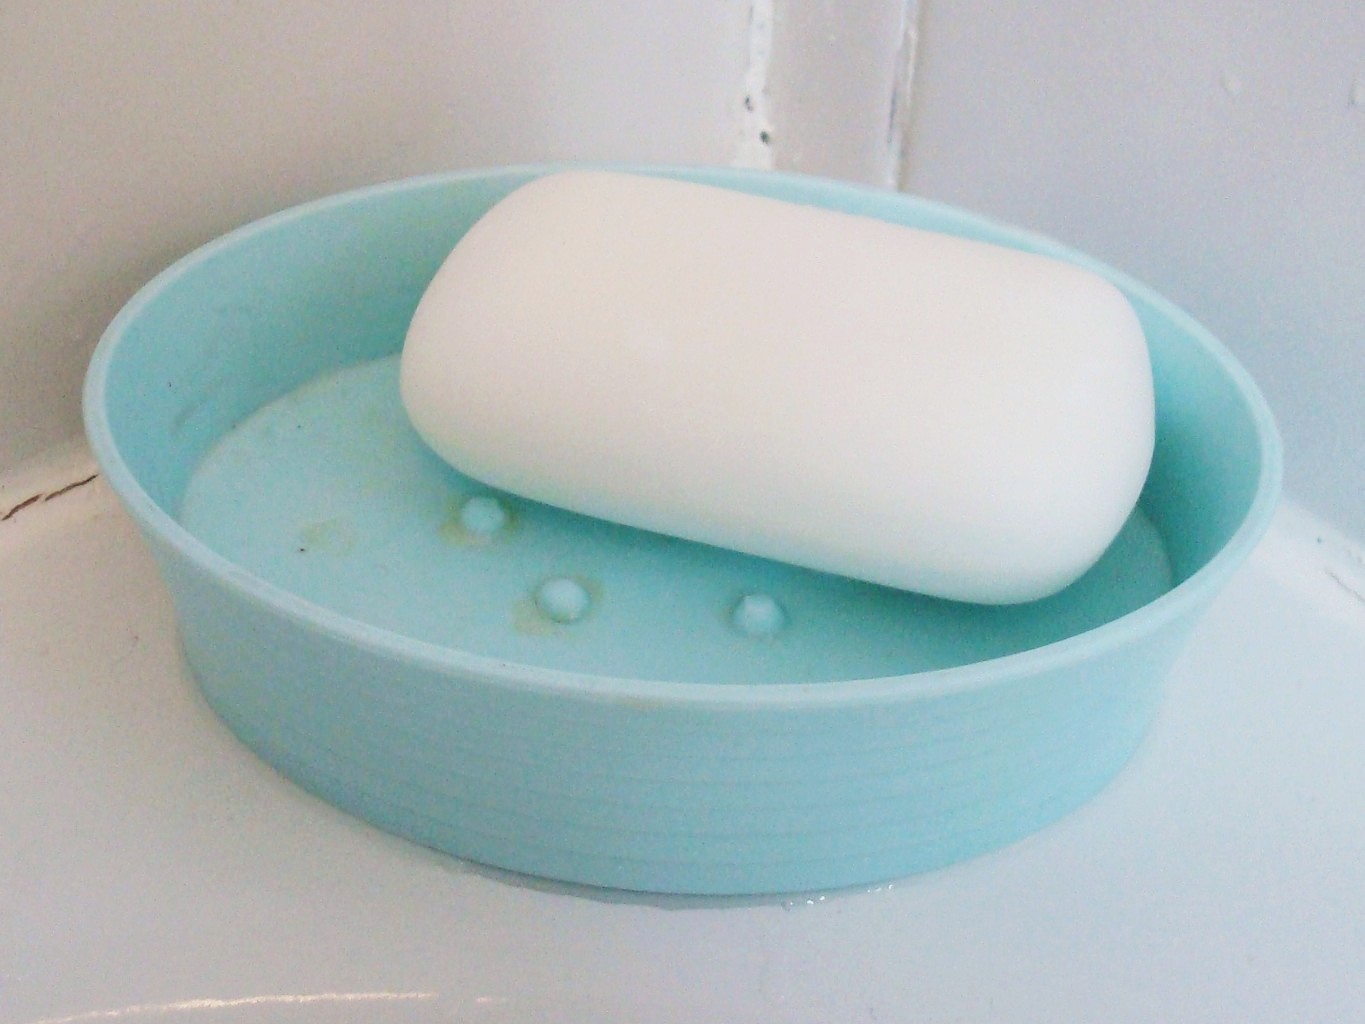 soap soap soap